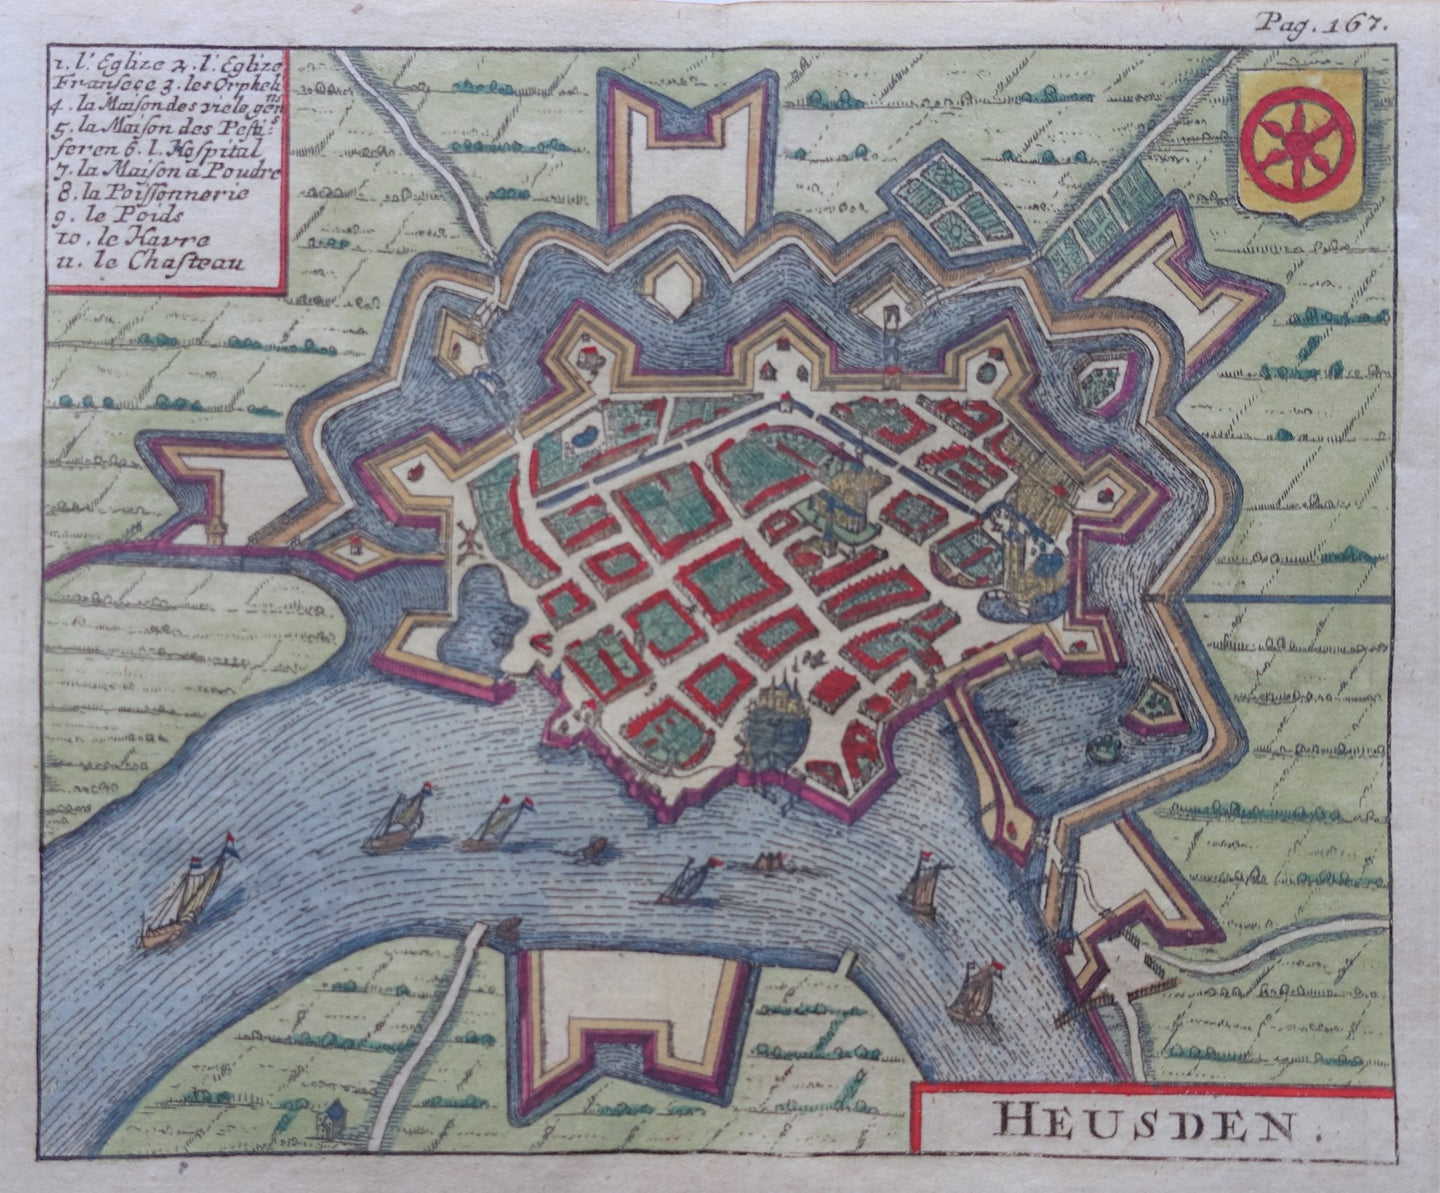 Heusden - Stadsplattegrond in vogelvluchtperspectief - H Wetstein - 1697